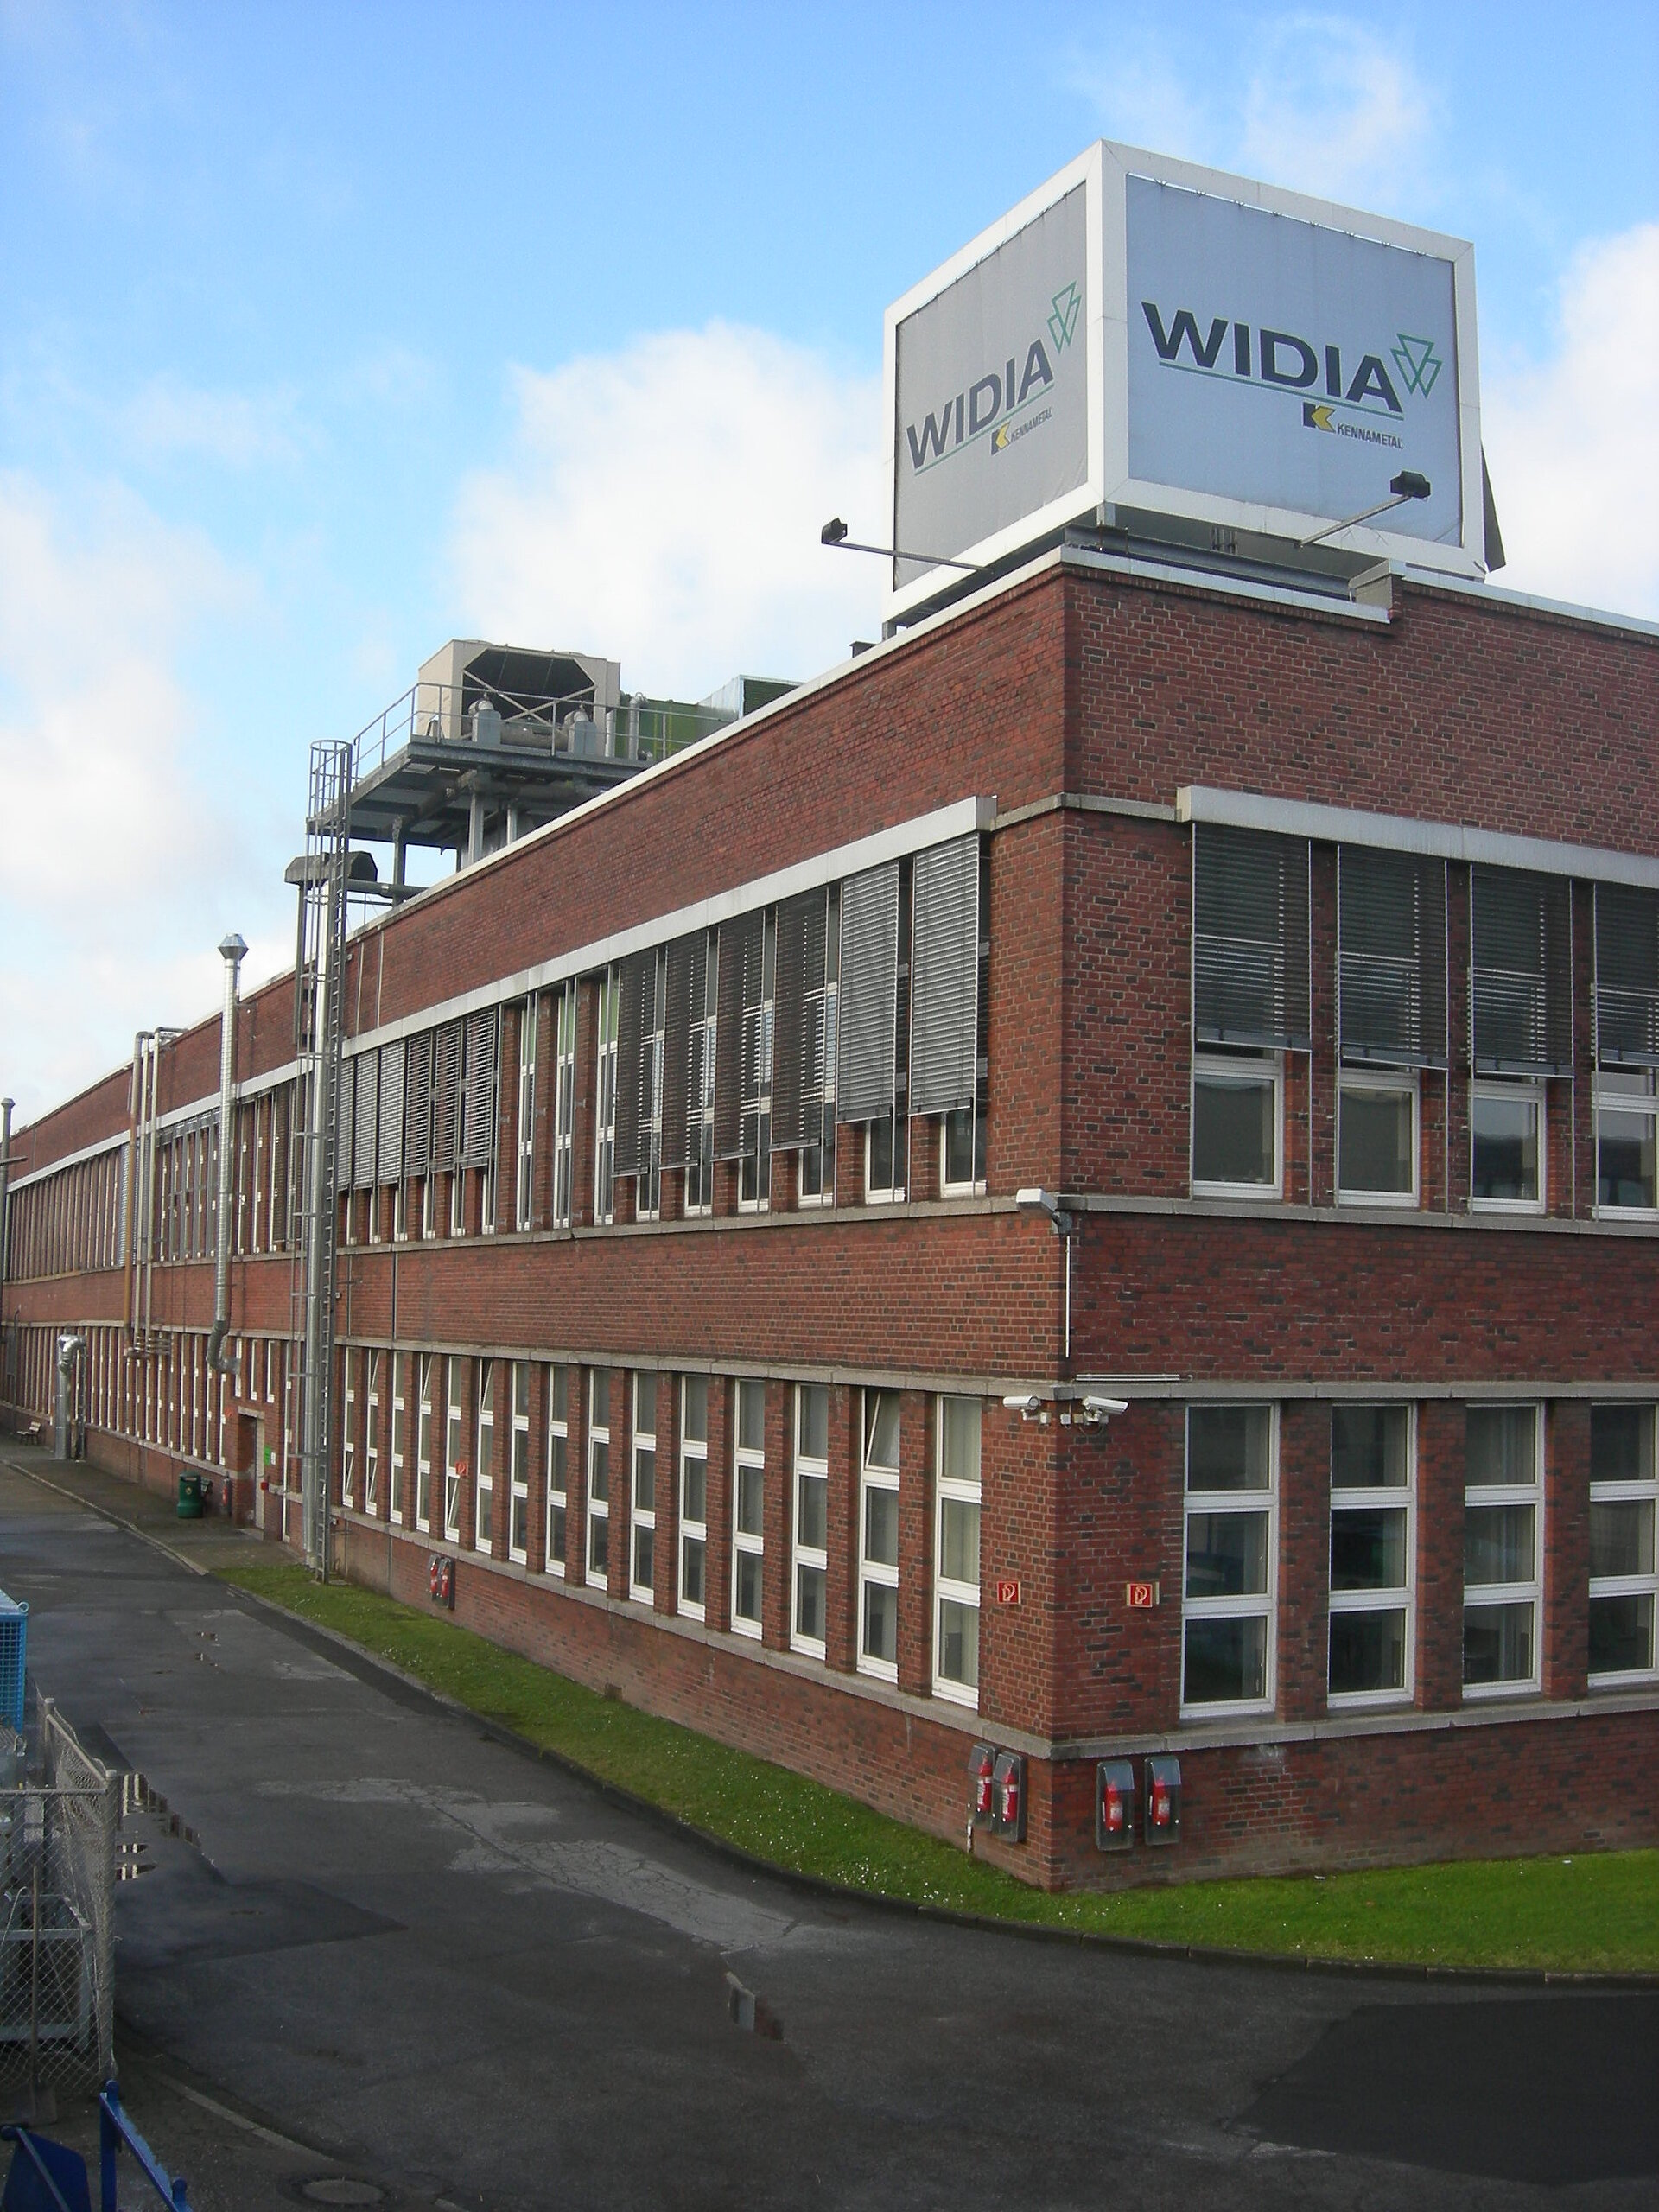 Widia-Fabrik, Essen.